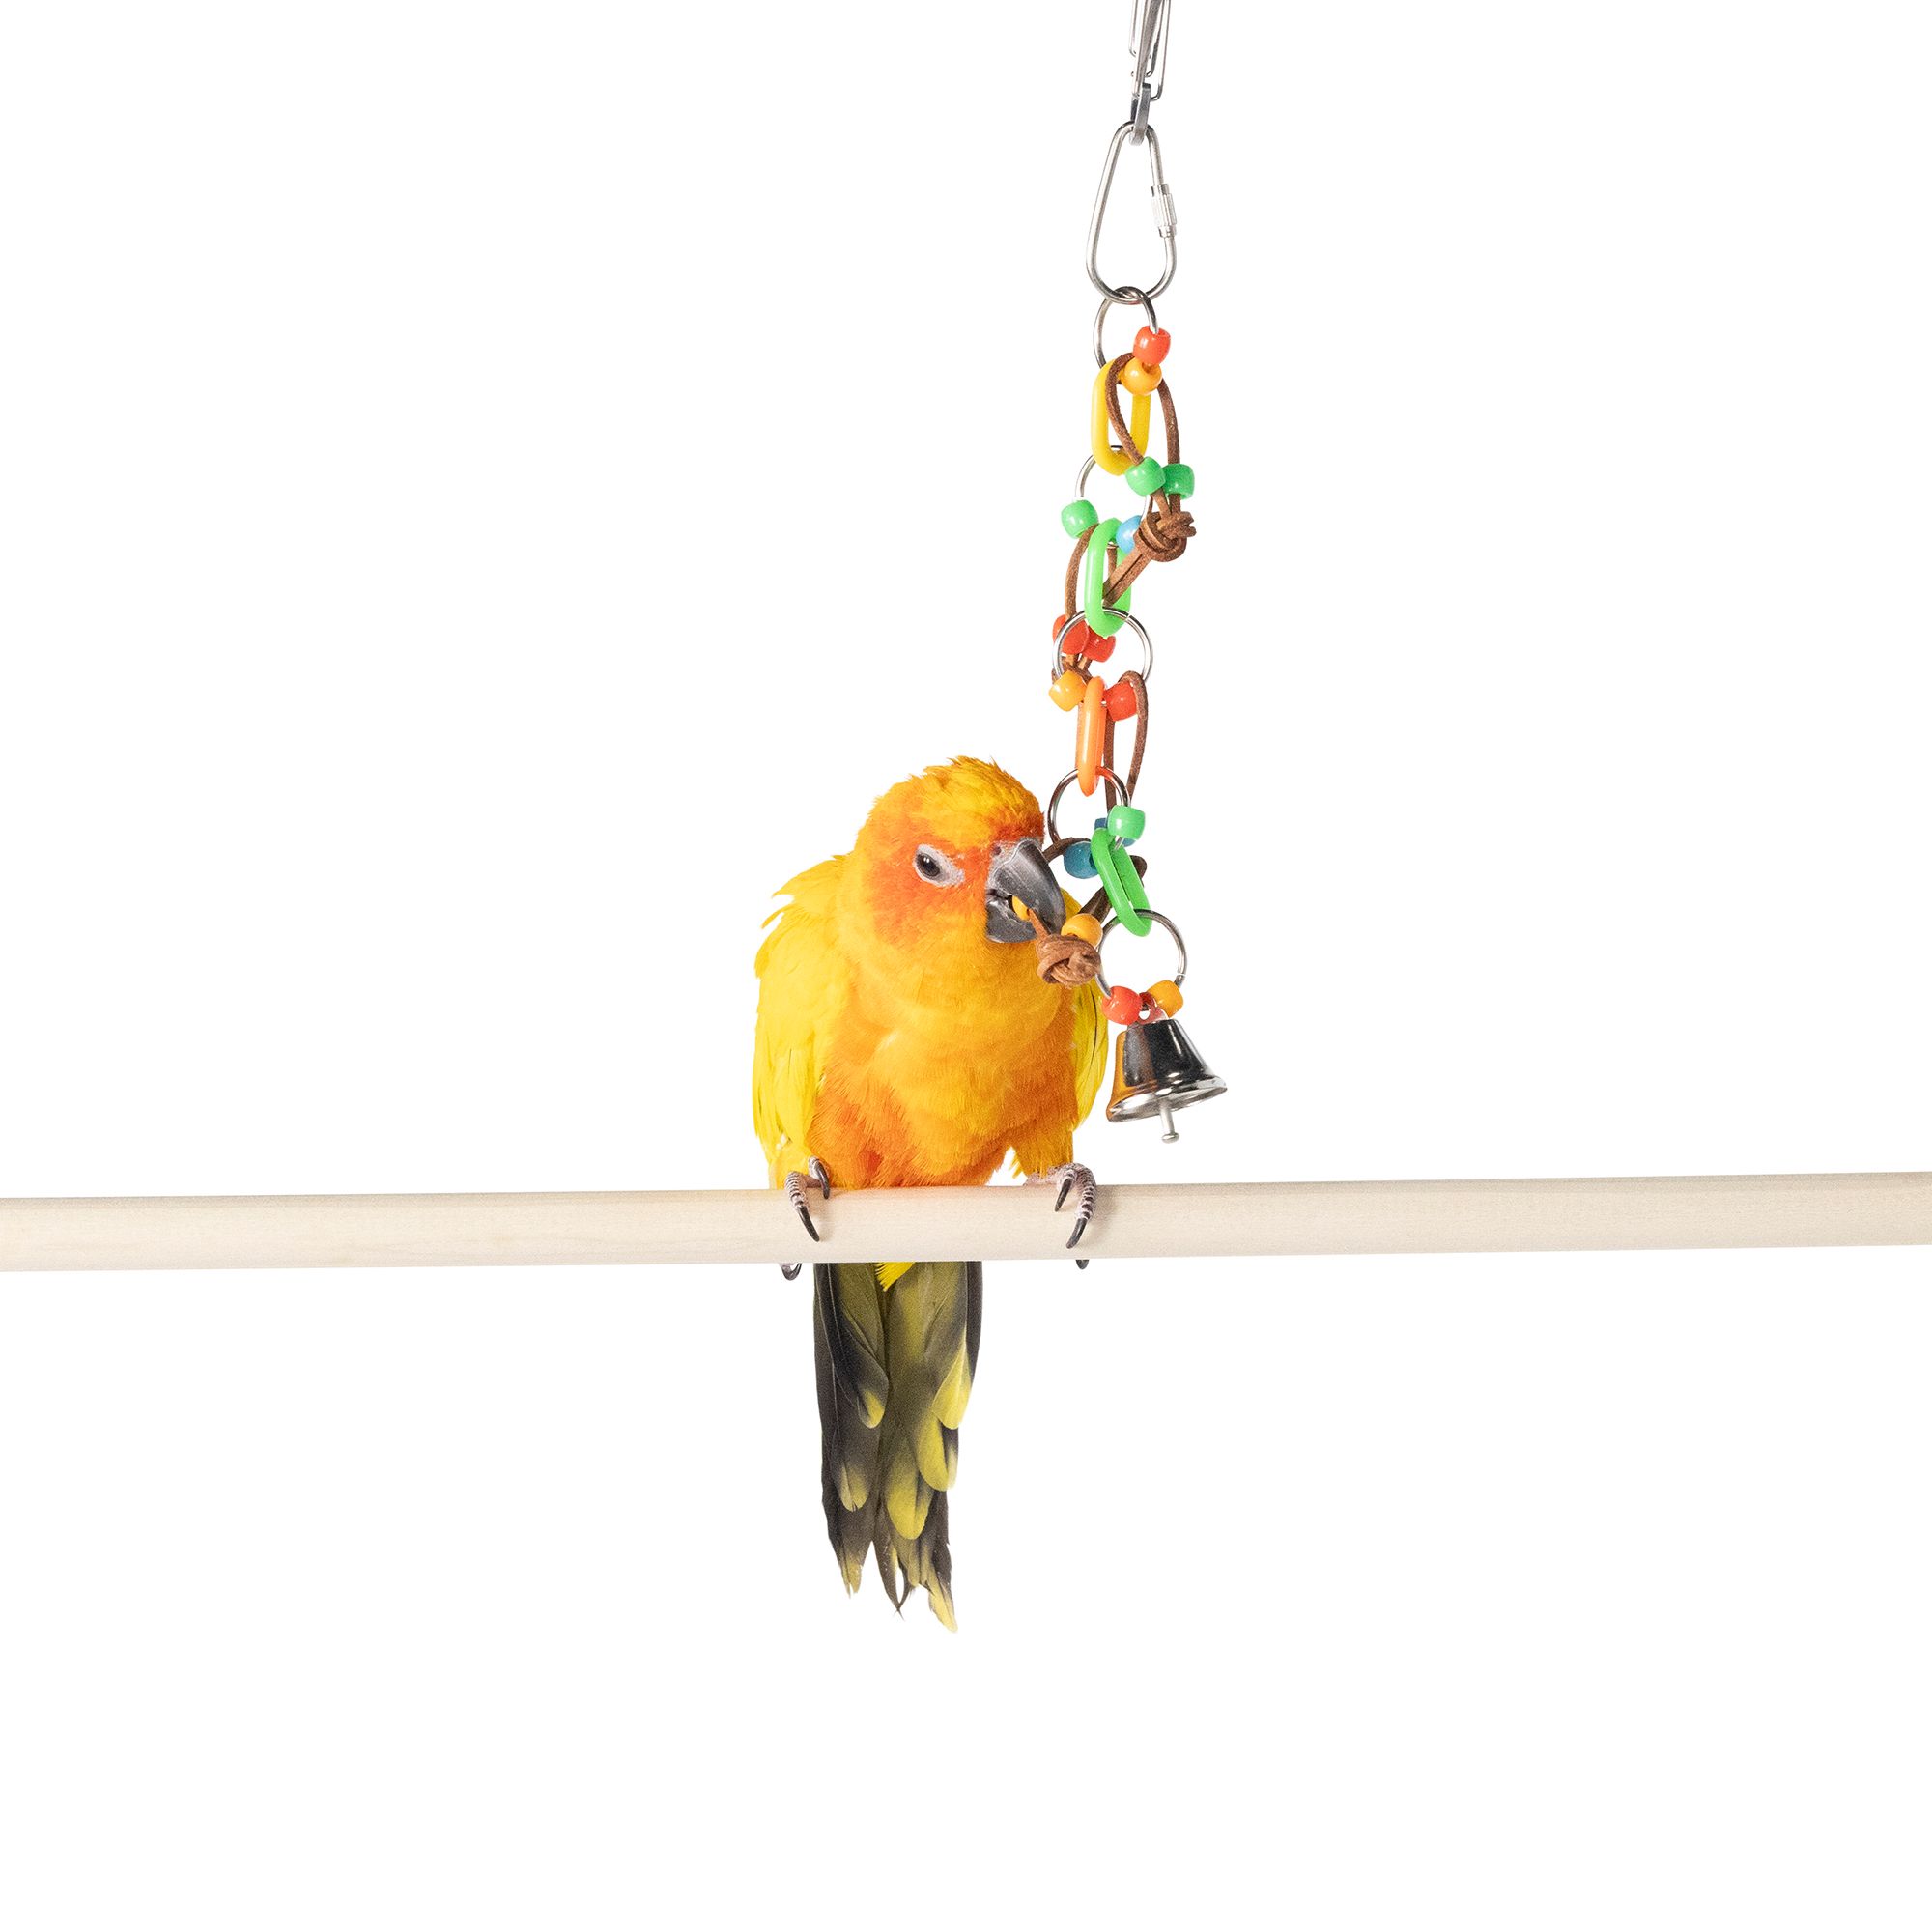 Living Things Chain Dangler Bird Toy